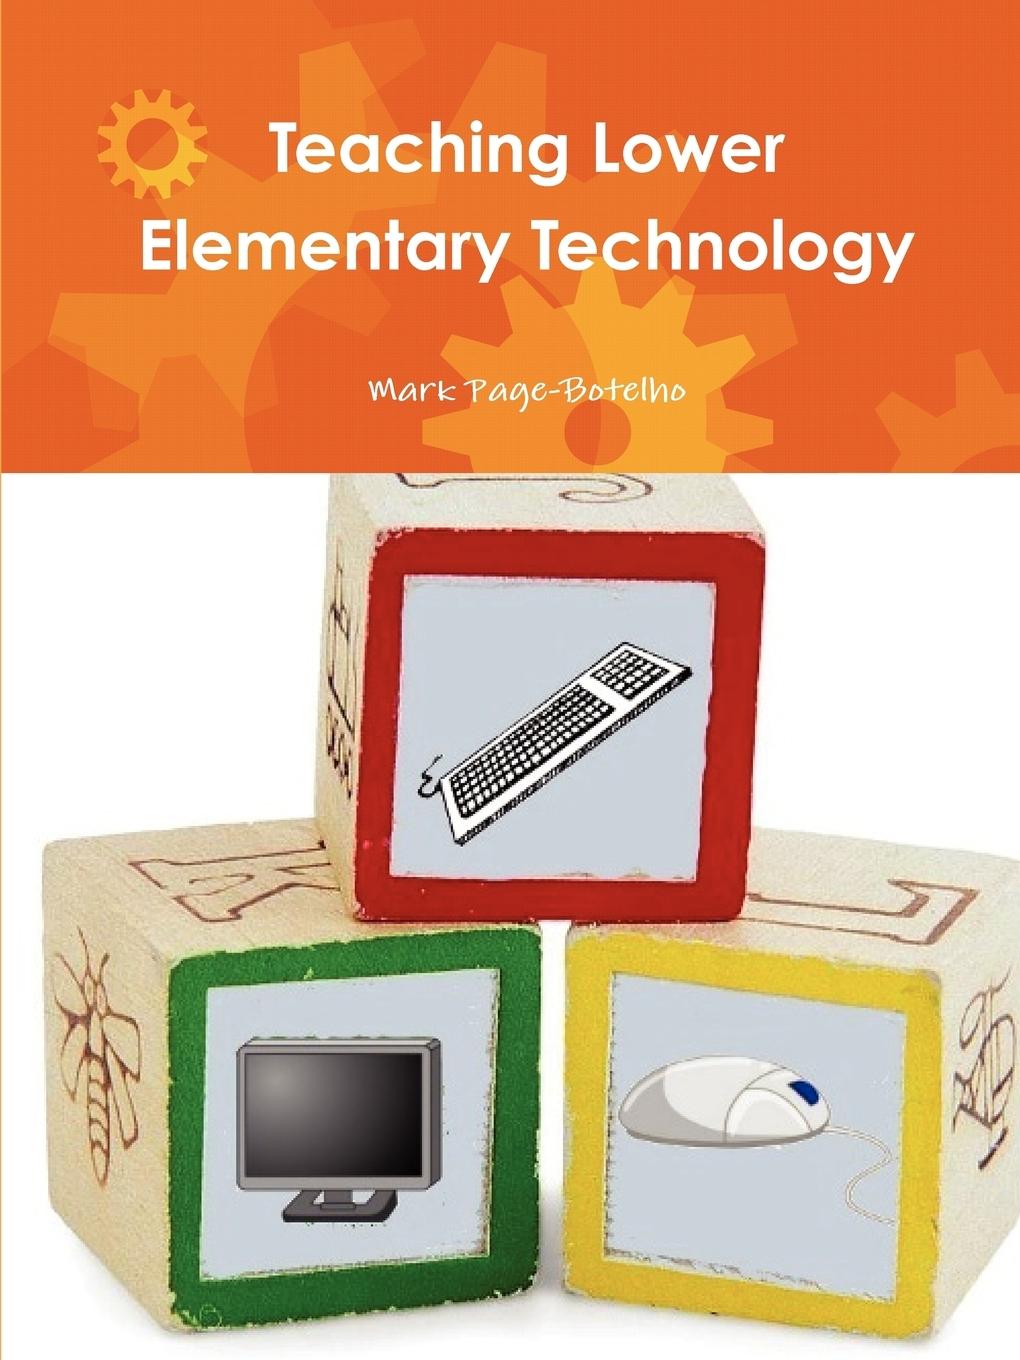 Teaching Lower Elementary Technology - Page-Botelho, Mark